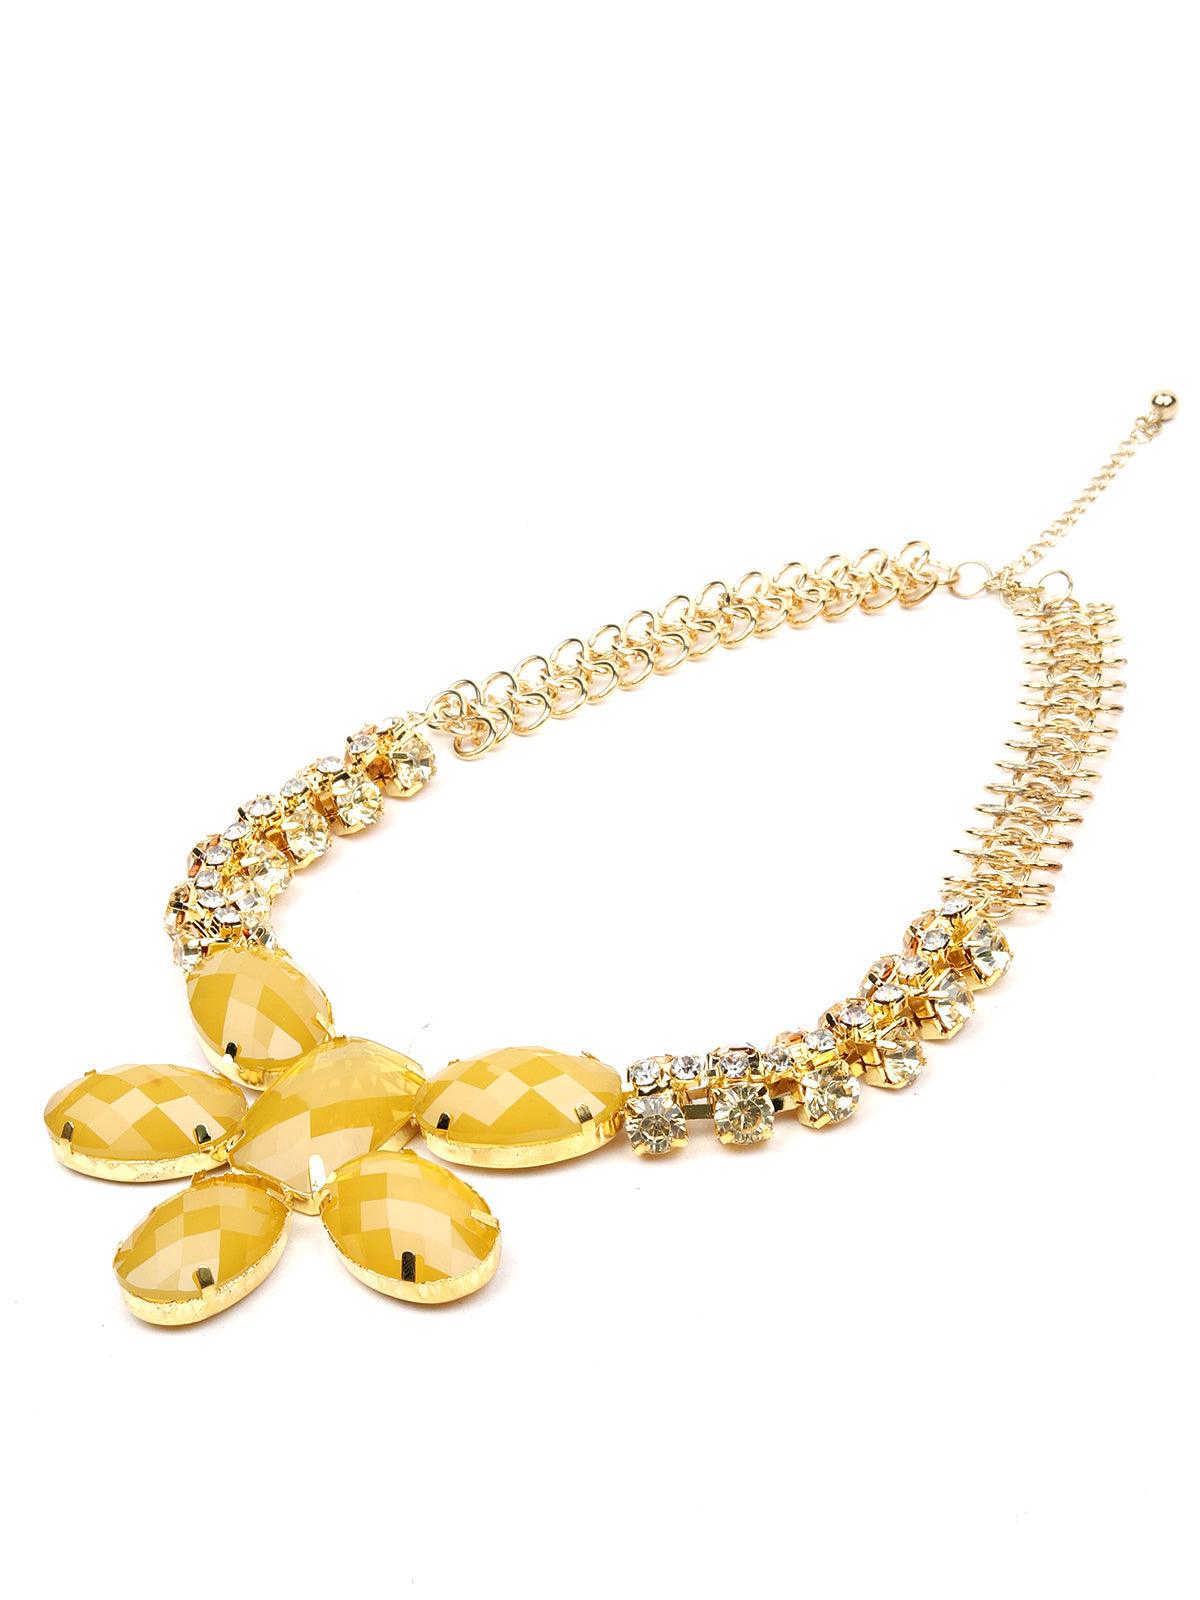 Sunshine yellow embellished necklace - Odette